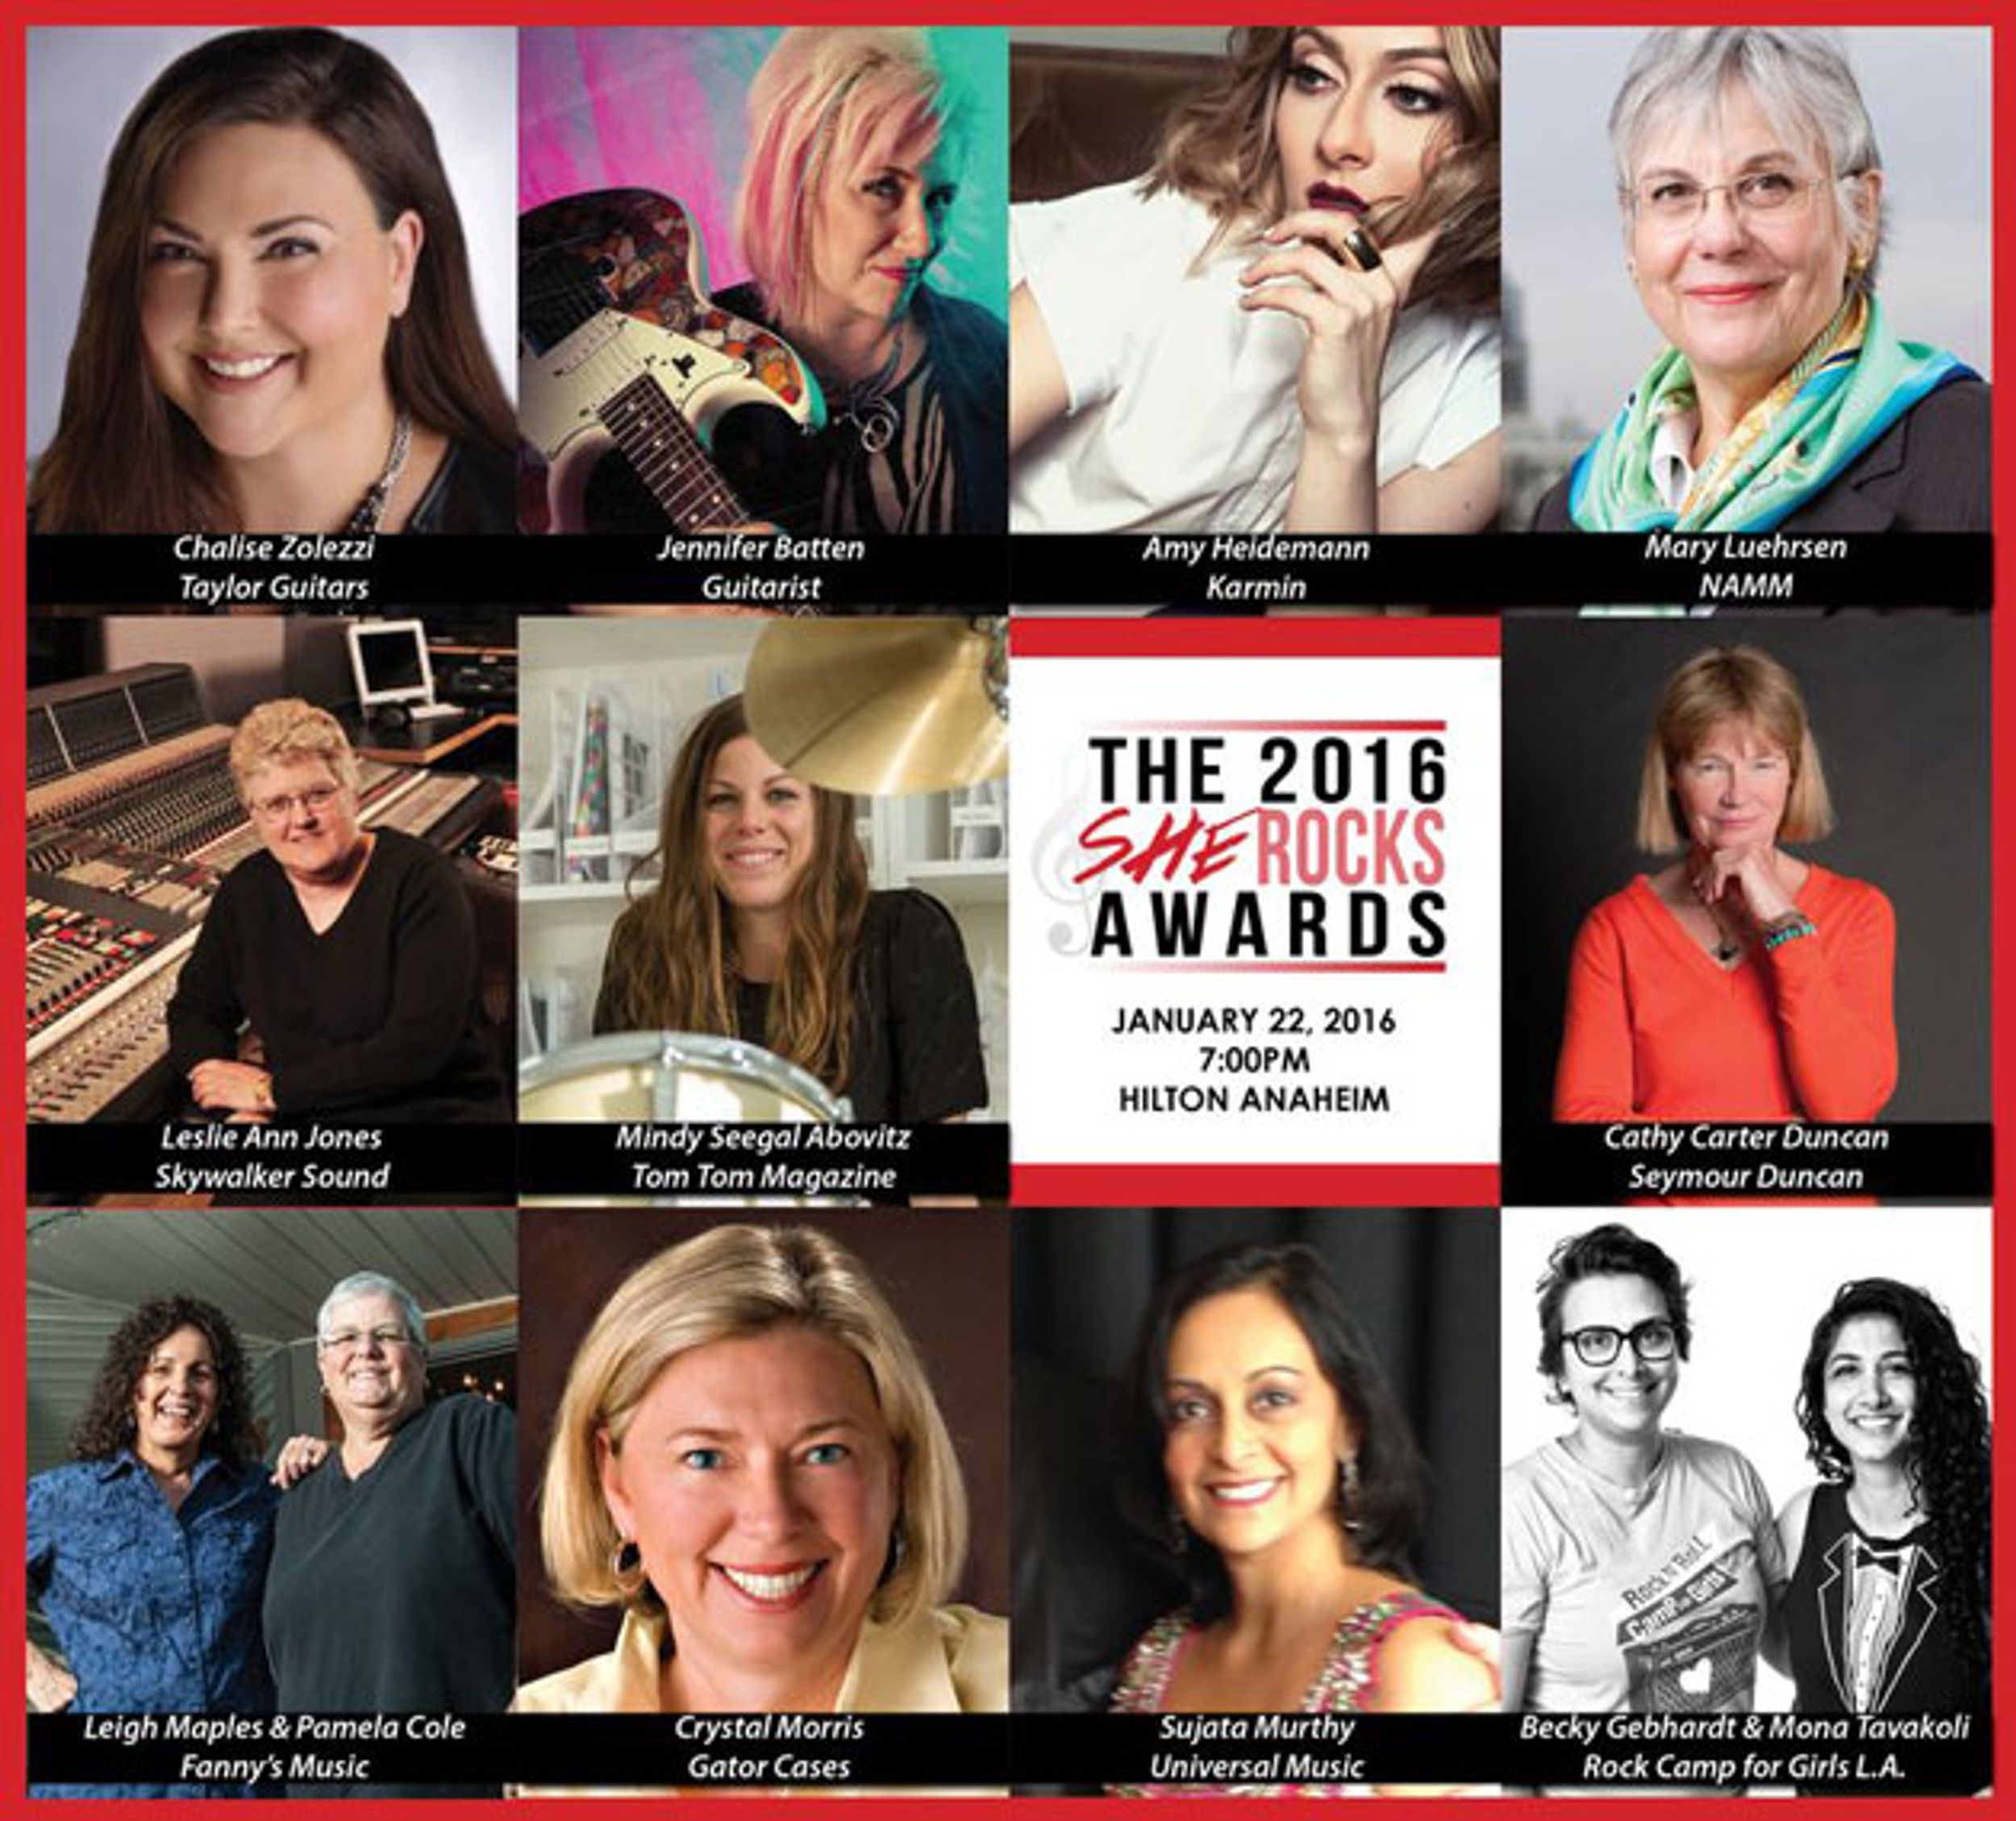 The Women’s International Music Network Announces the 2016 She Rocks Award Recipients